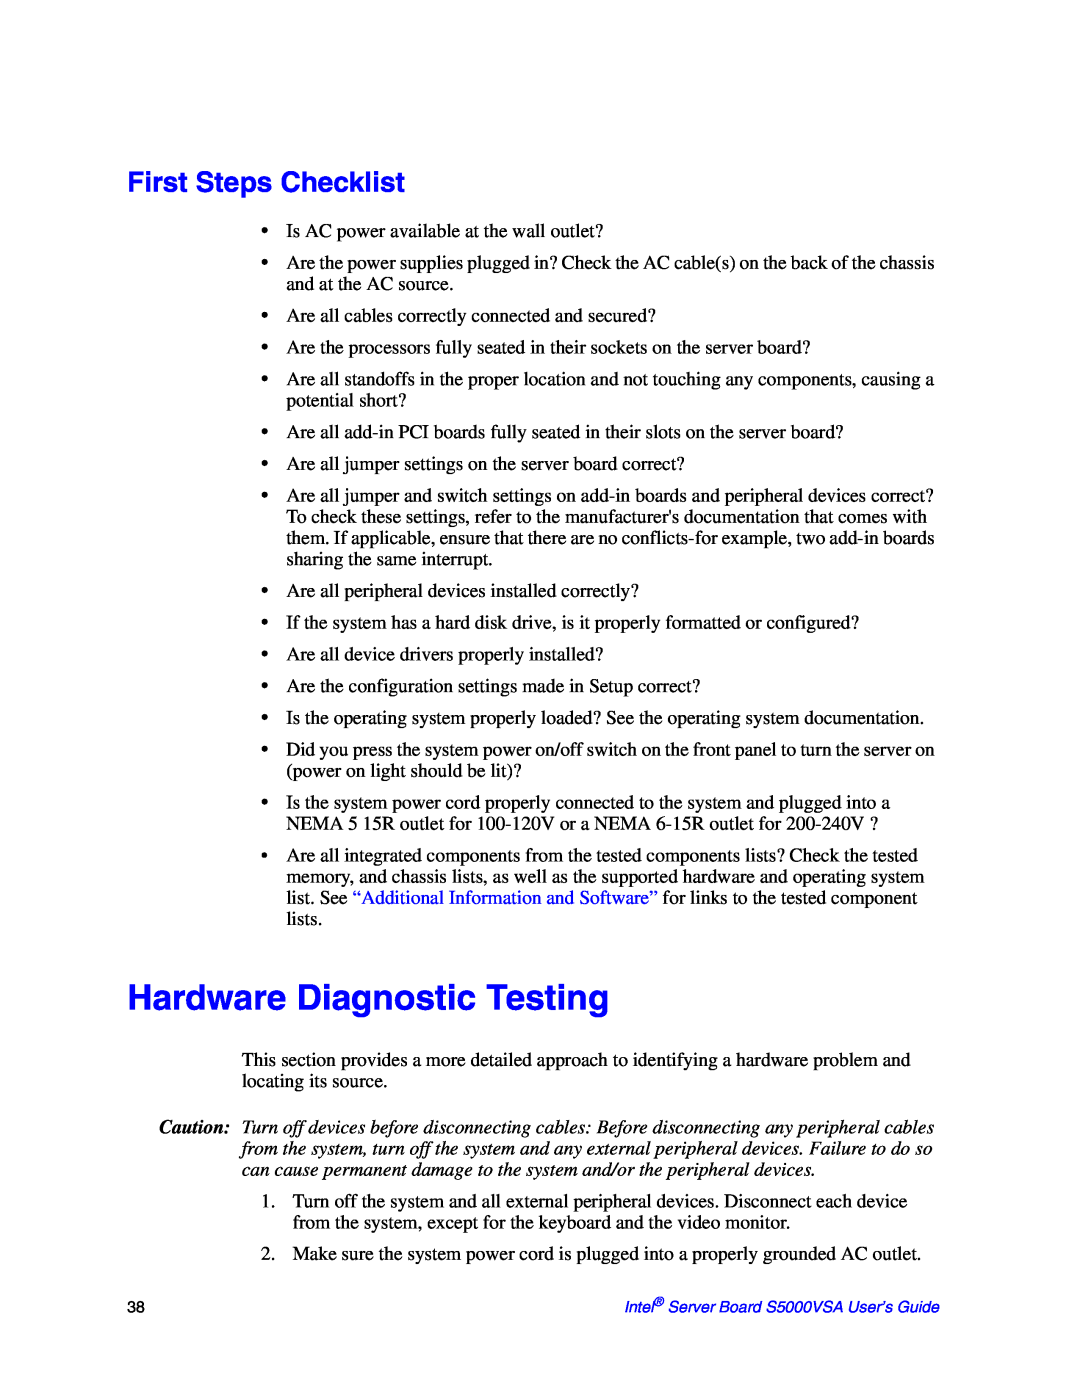 Intel S5000VSA manual Hardware Diagnostic Testing, First Steps Checklist 